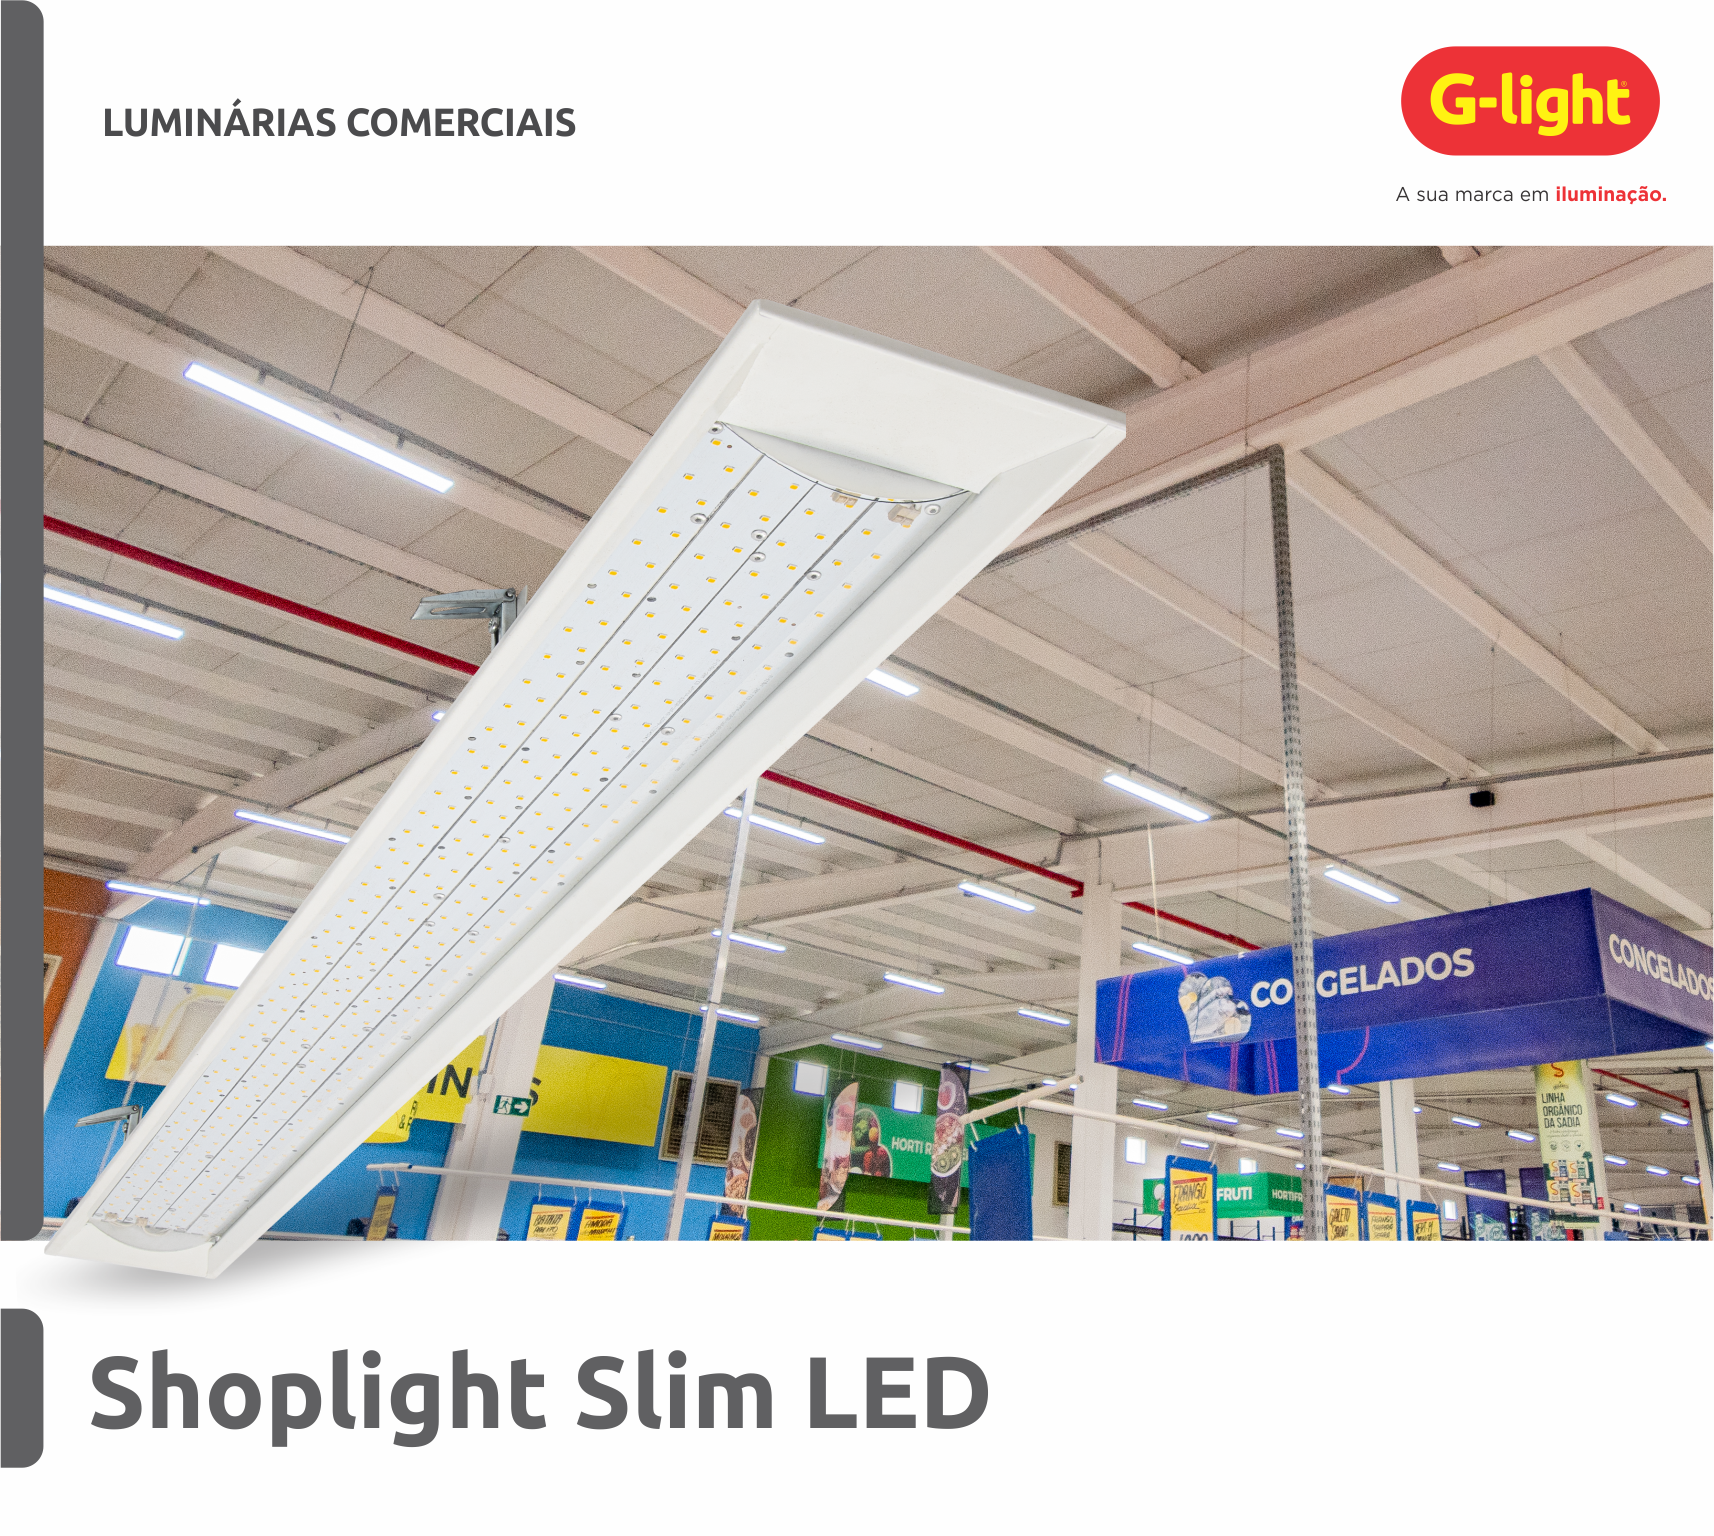 Shoplight Slim LED